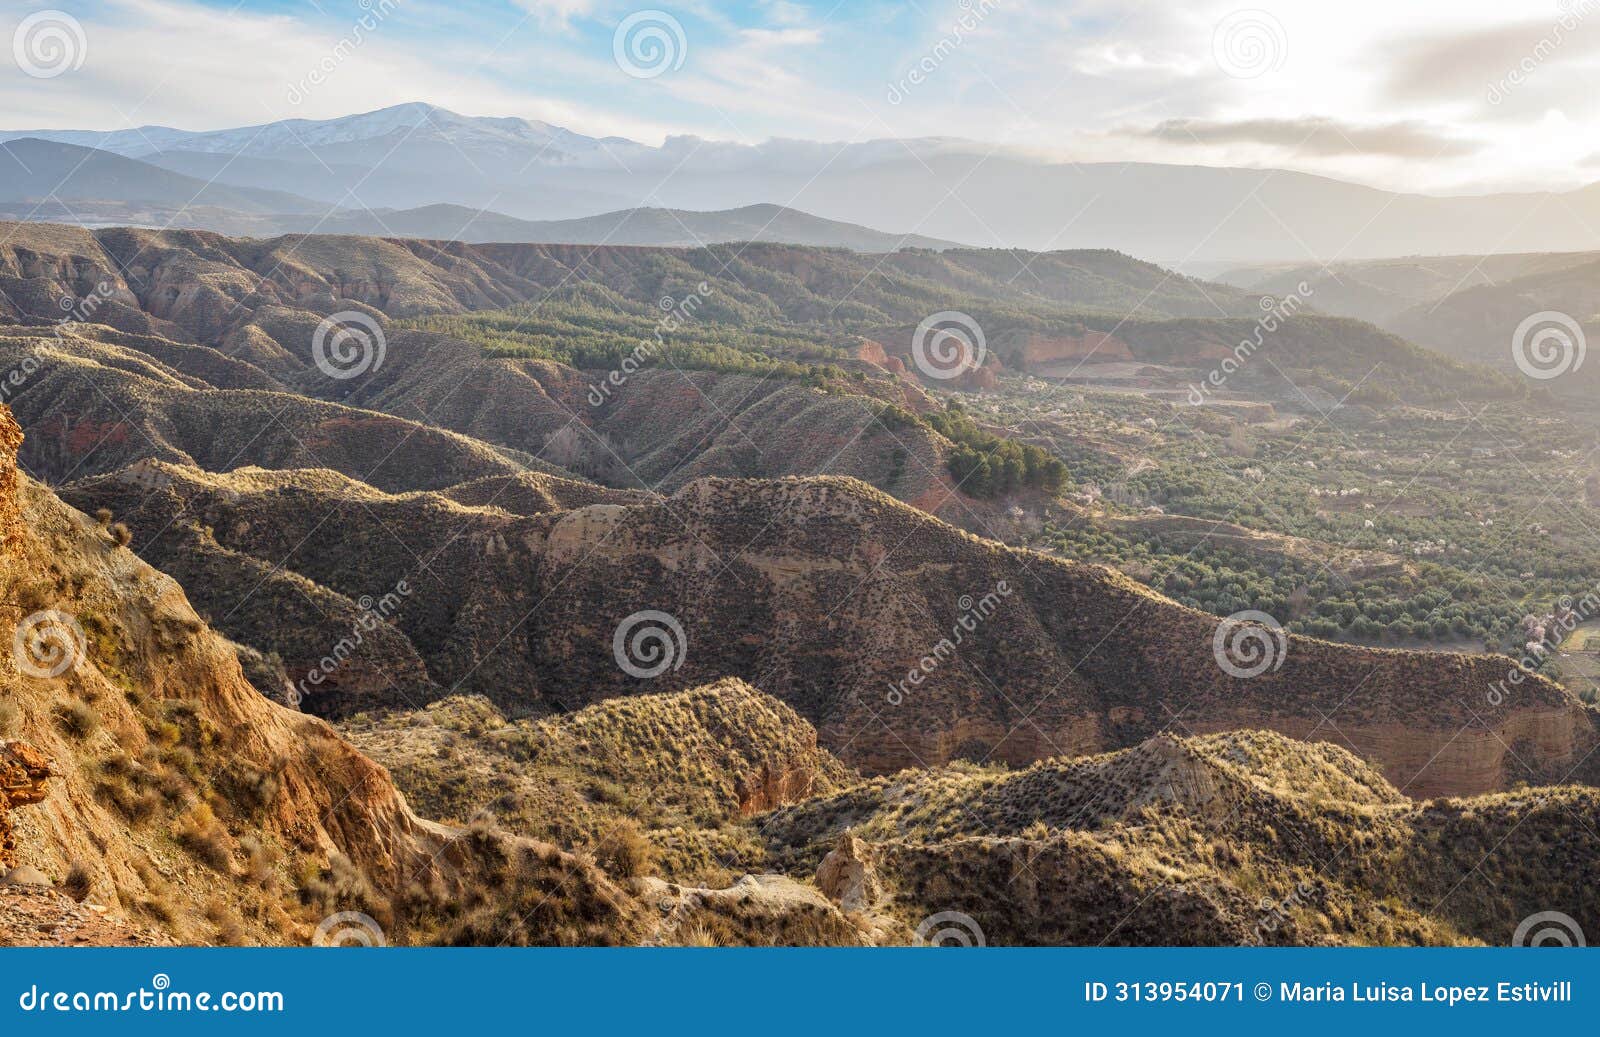 tabernas desert panoramic landscape from 